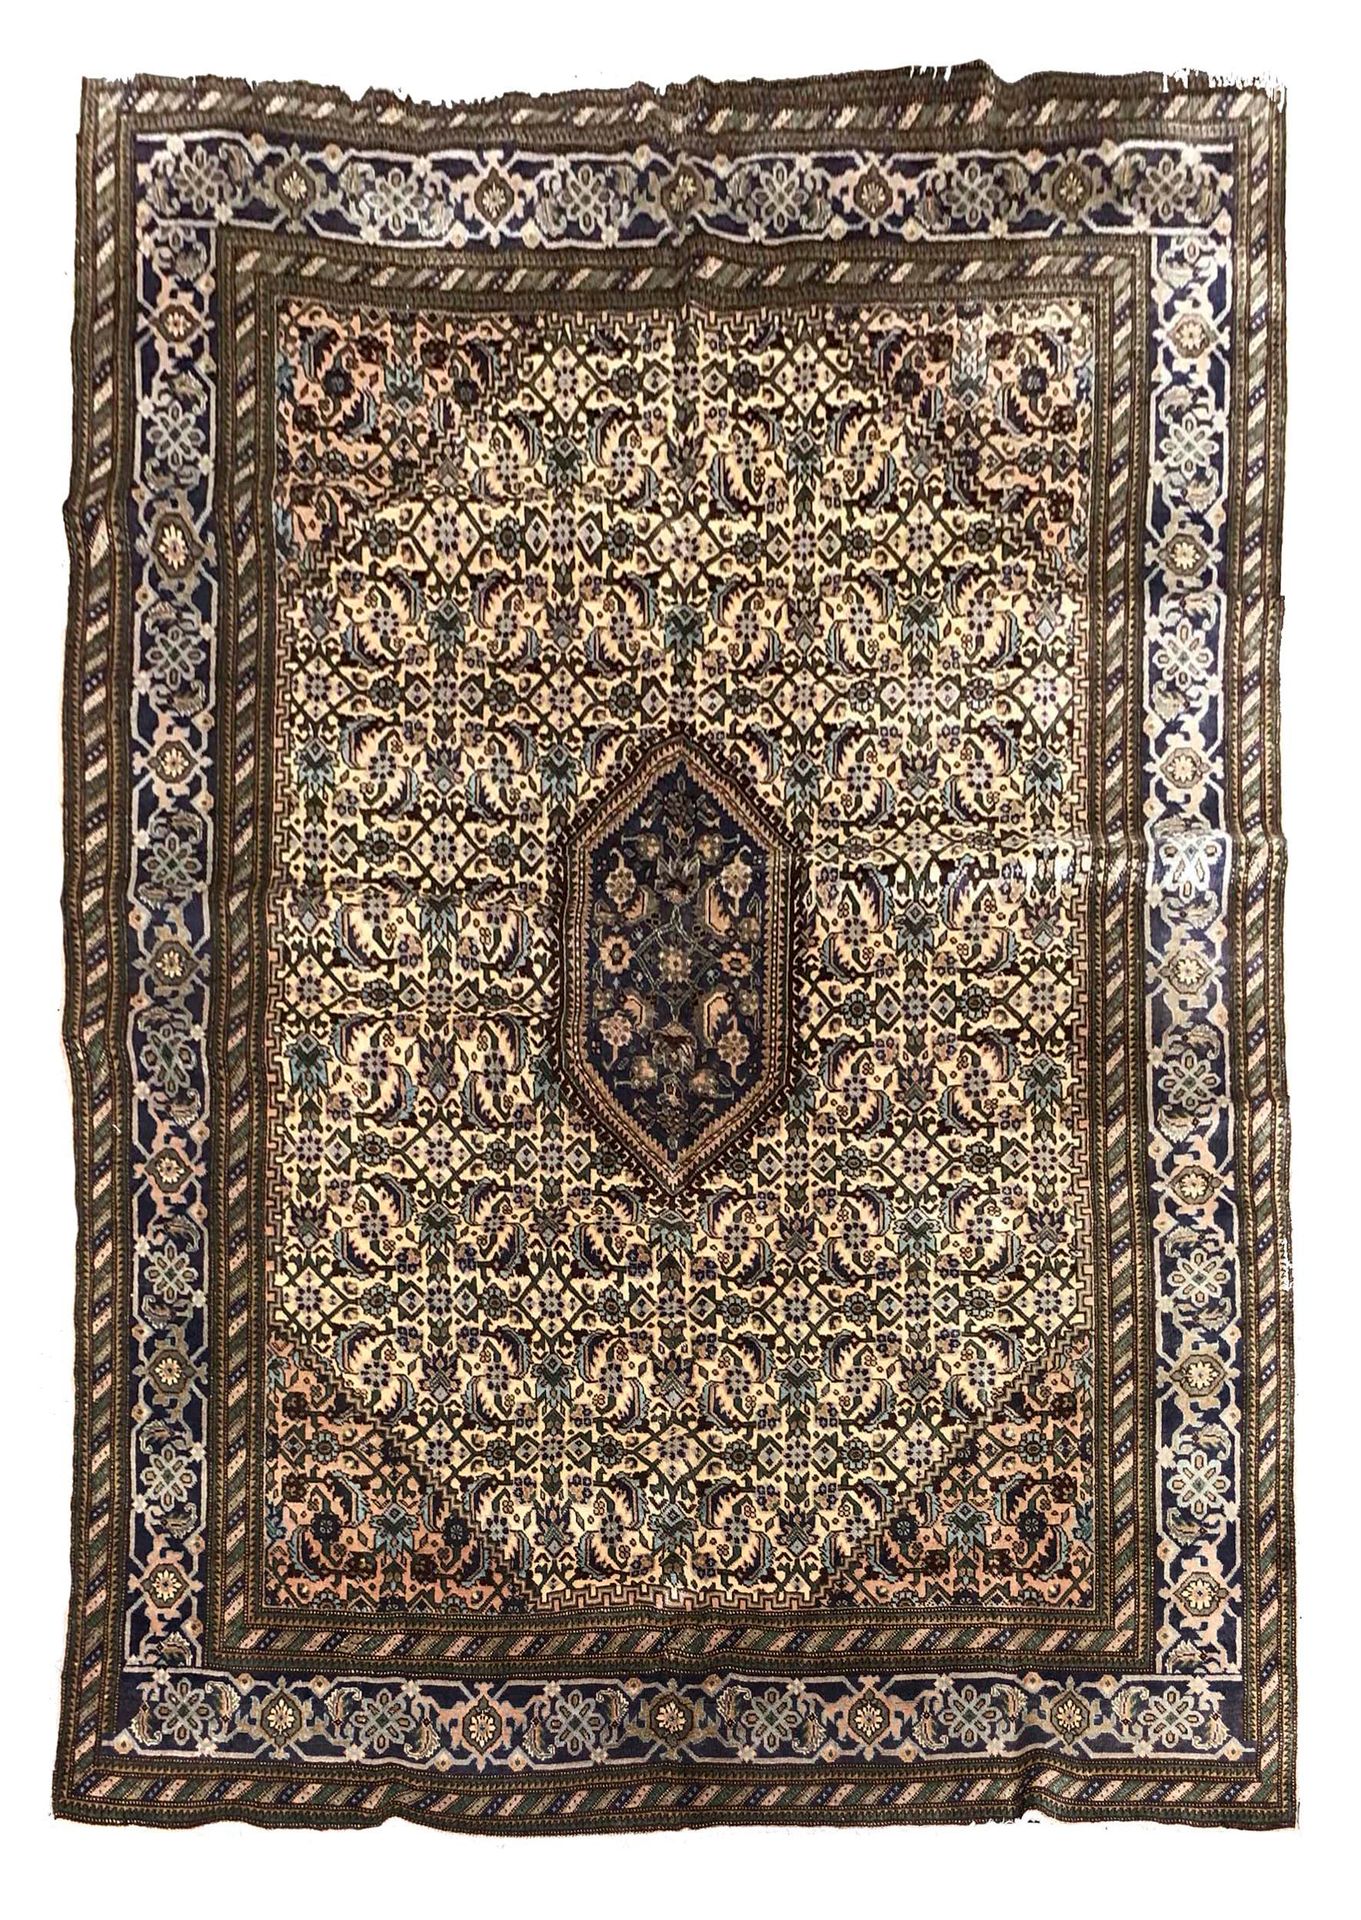 Null MÉCHKINE地毯（伊朗），20世纪中期

尺寸：311 x 228厘米。

技术特点 : 羊毛丝绒，棉质基础。

象牙色的场地上有风格化的花朵和叶&hellip;